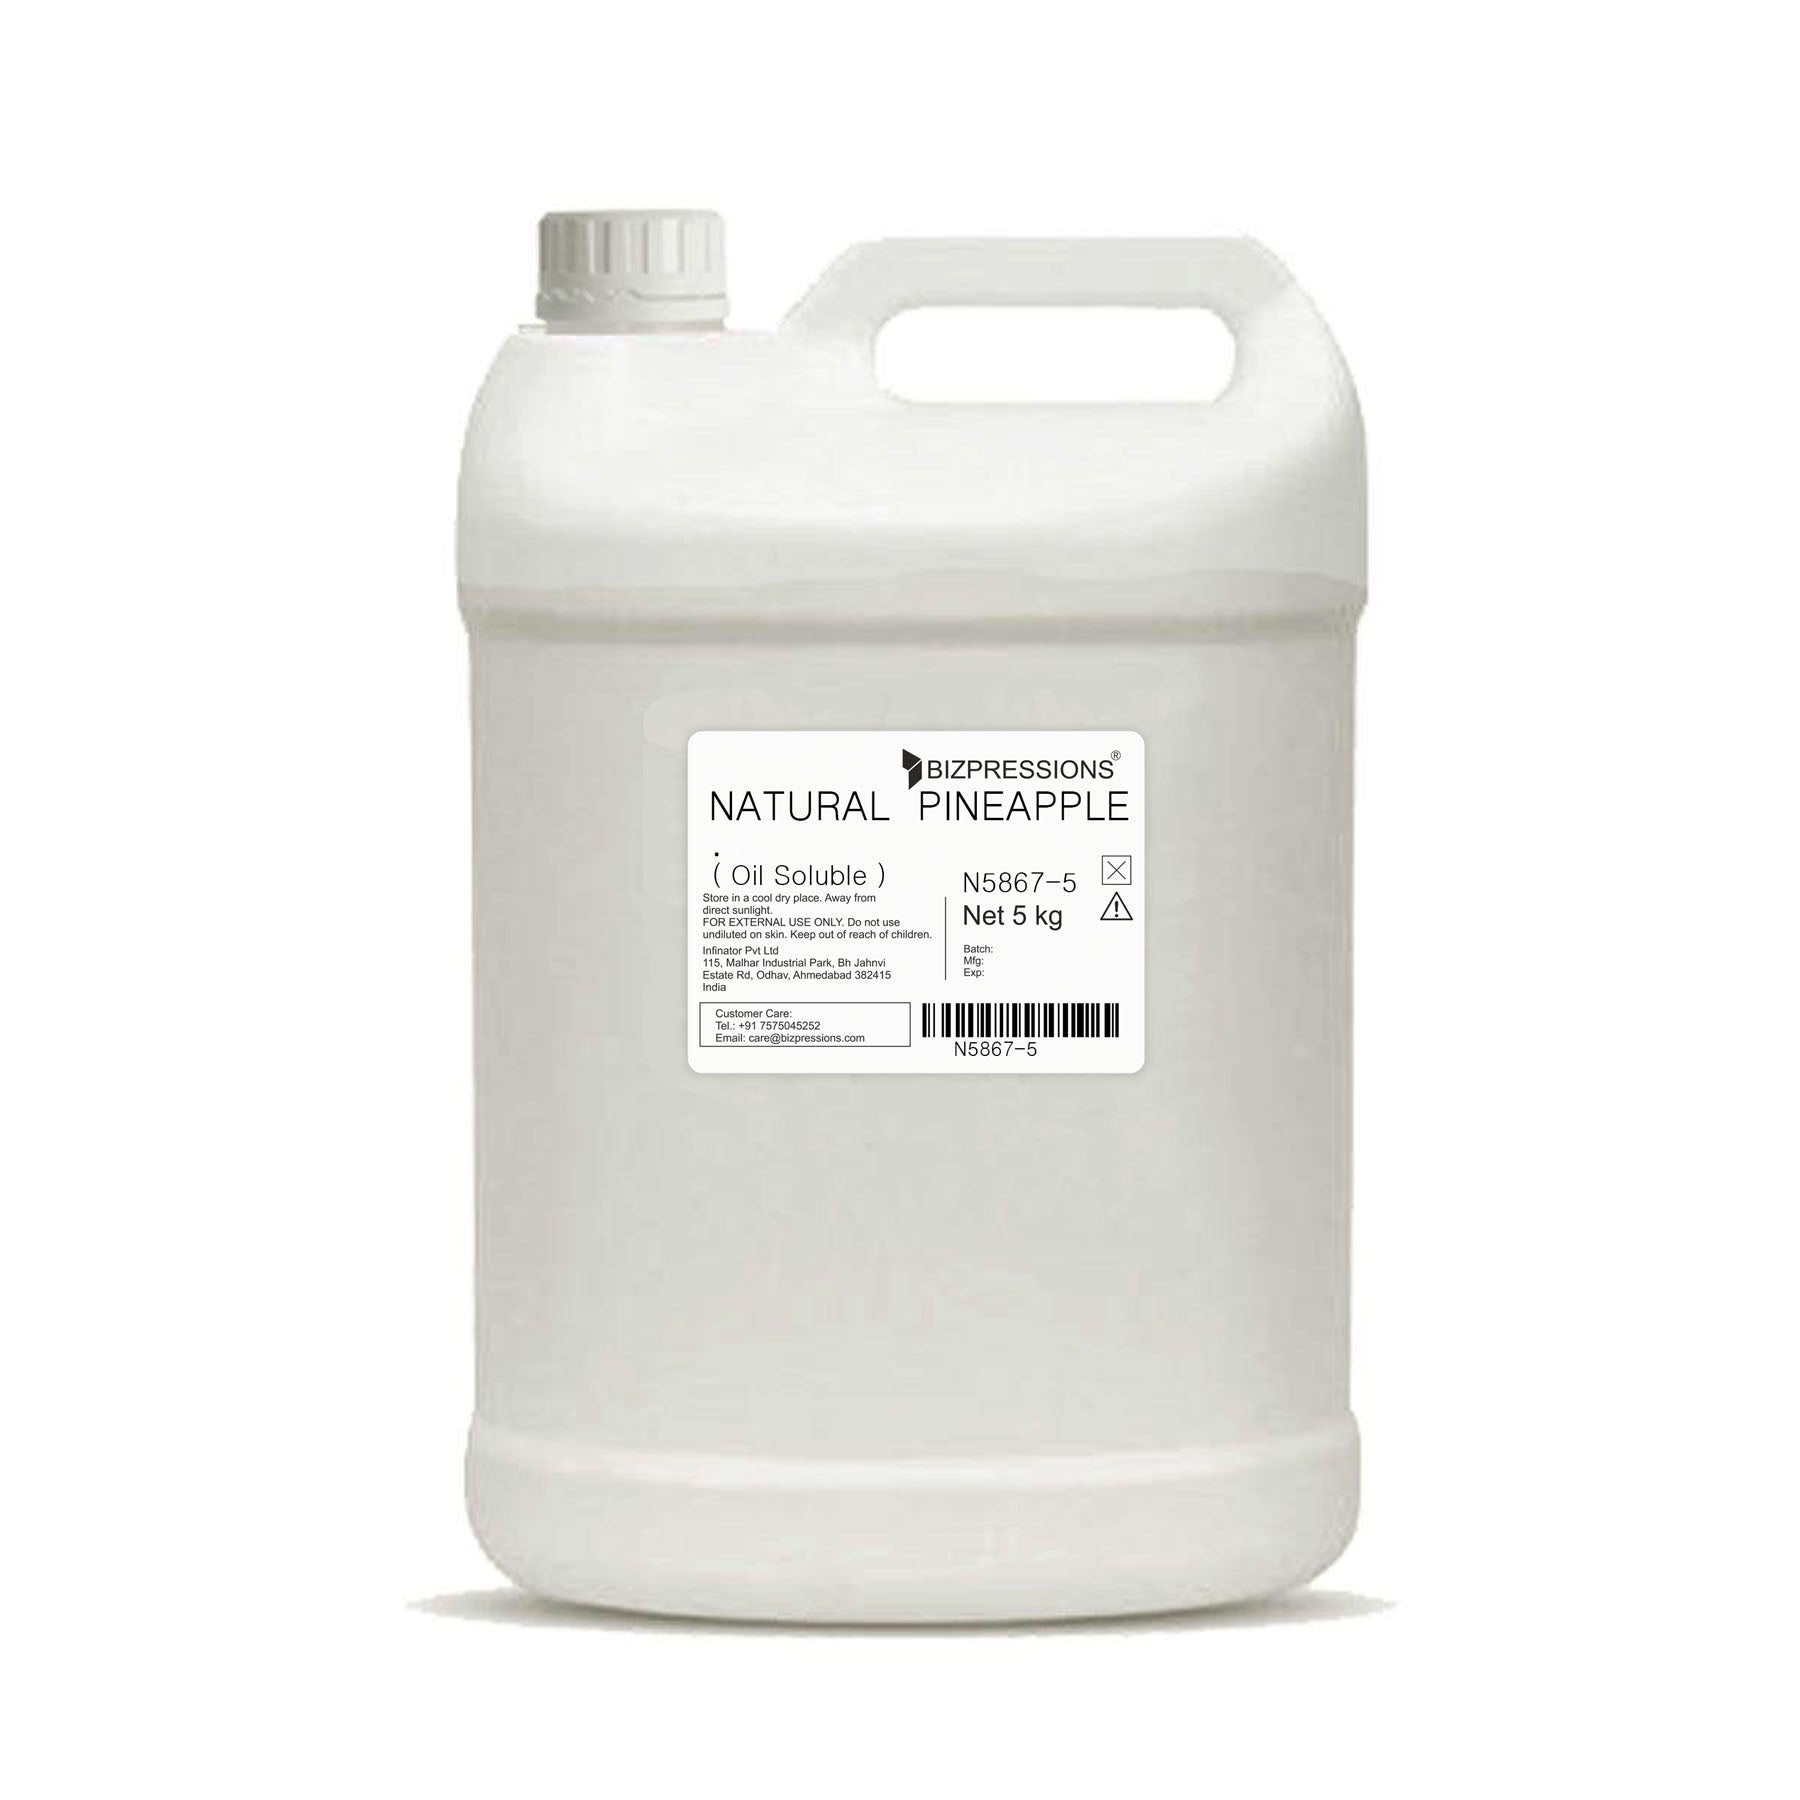 NATURAL PINEAPPLE - Fragrance ( Oil Soluble ) - 5 kg